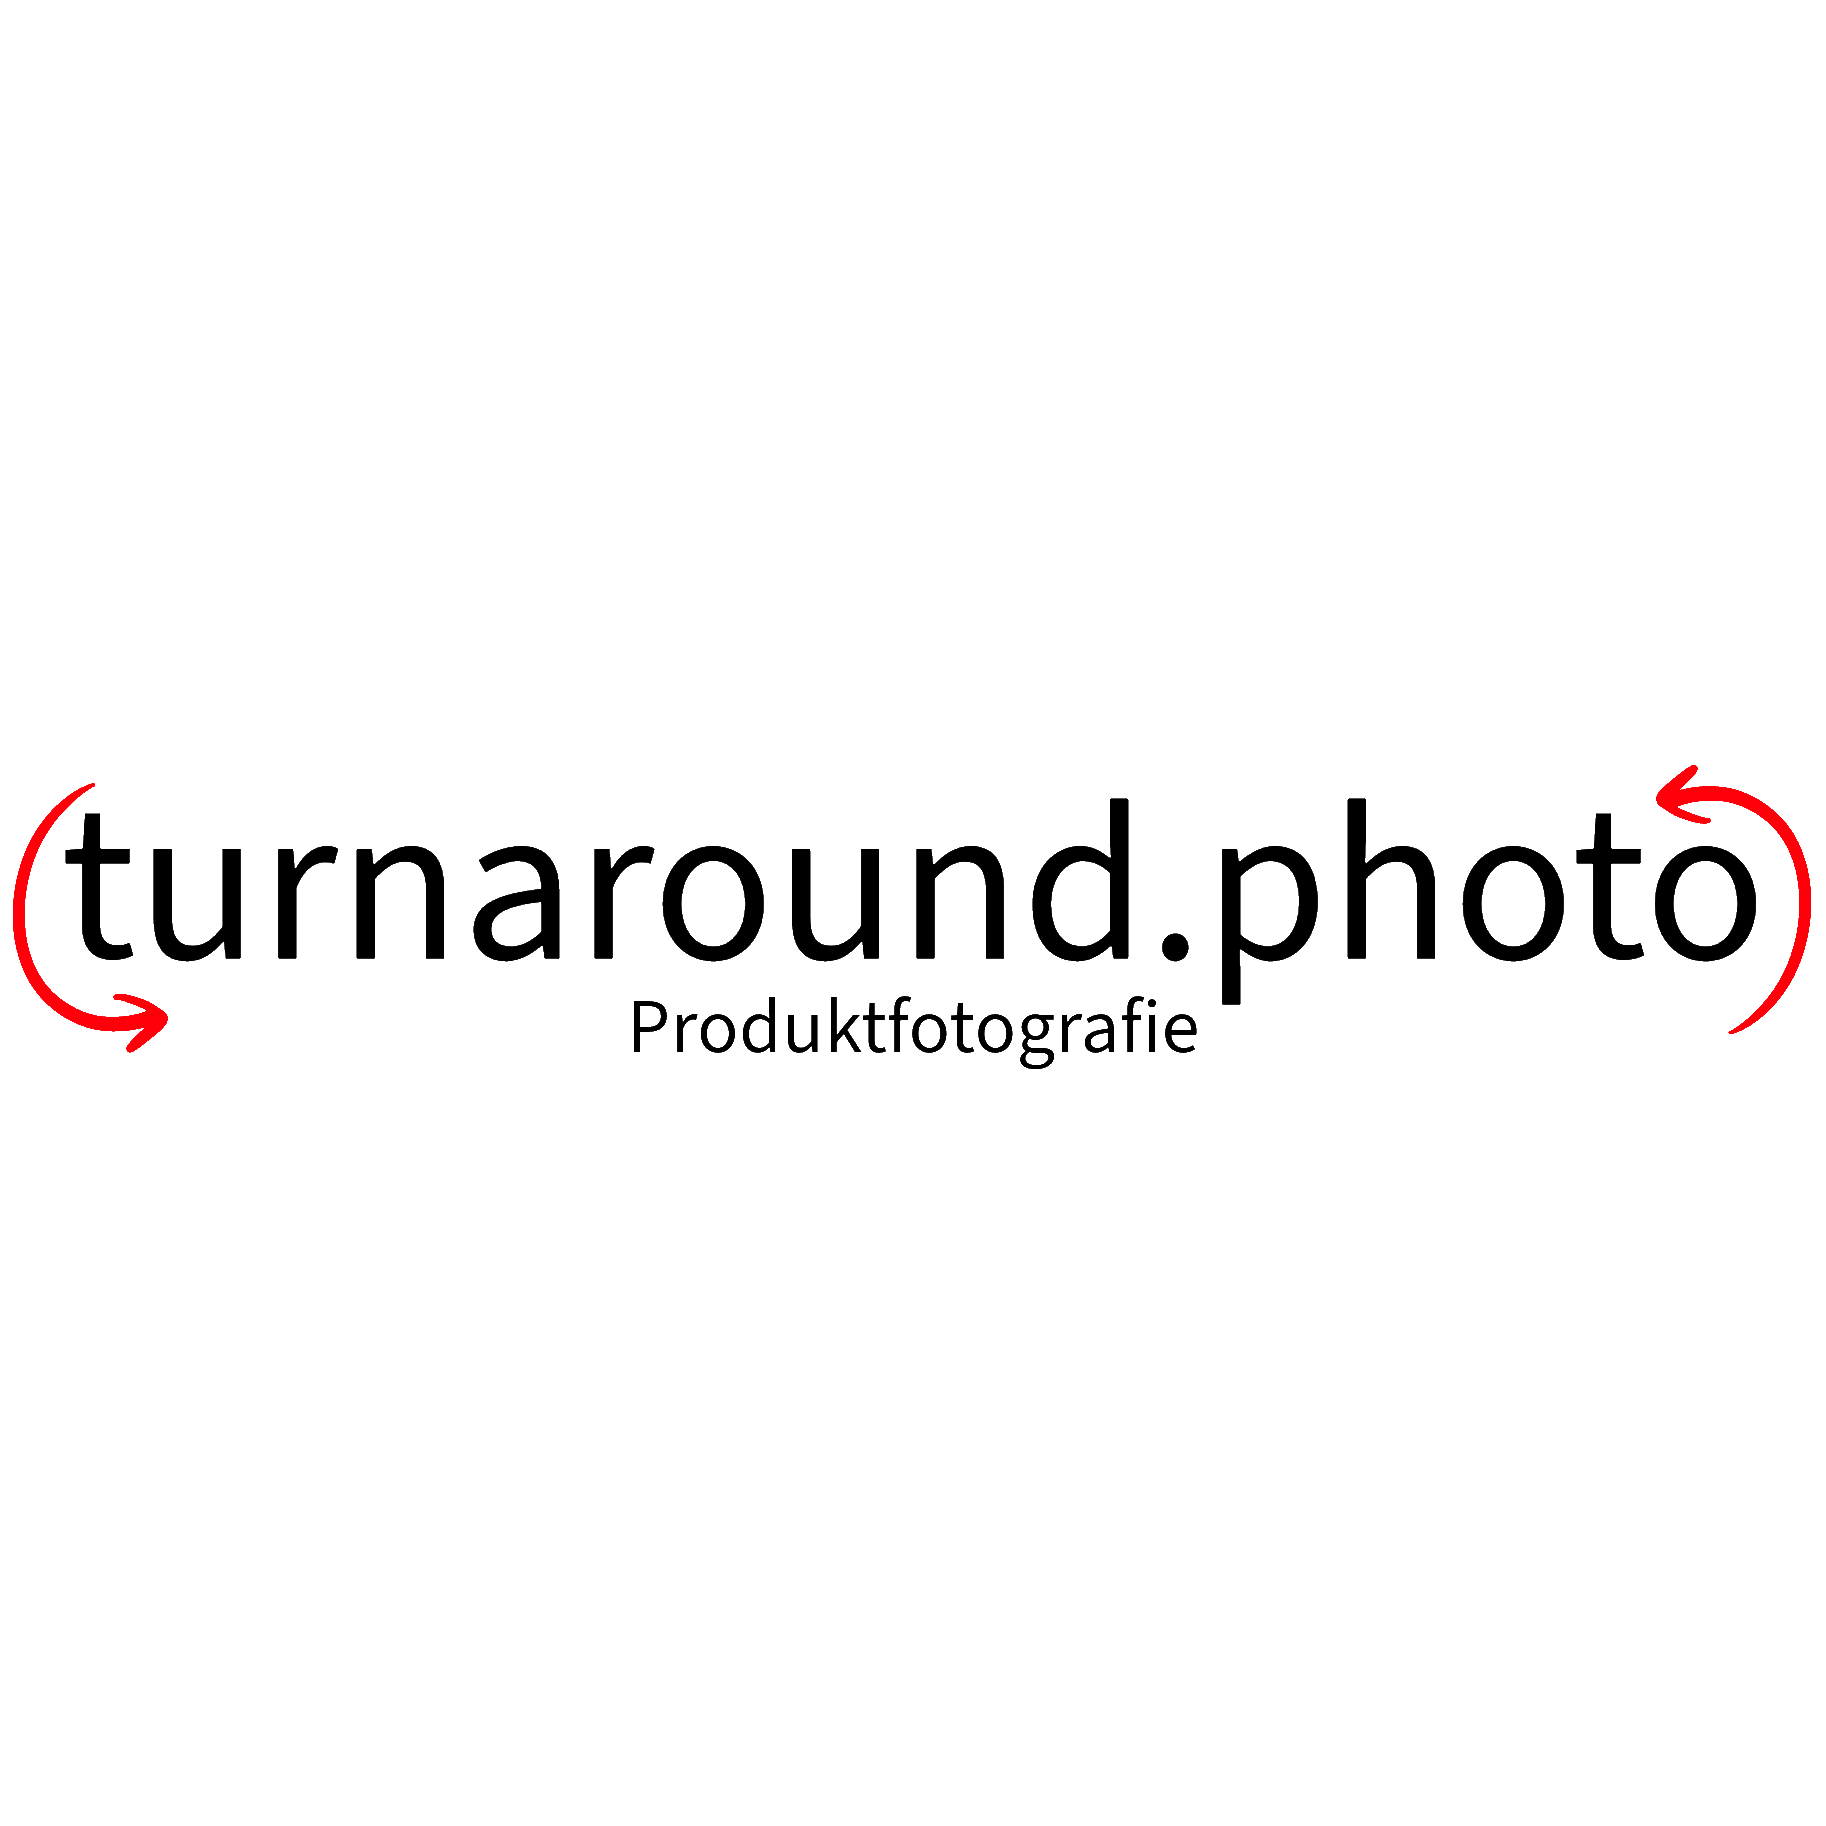 Logo turnaround.photo